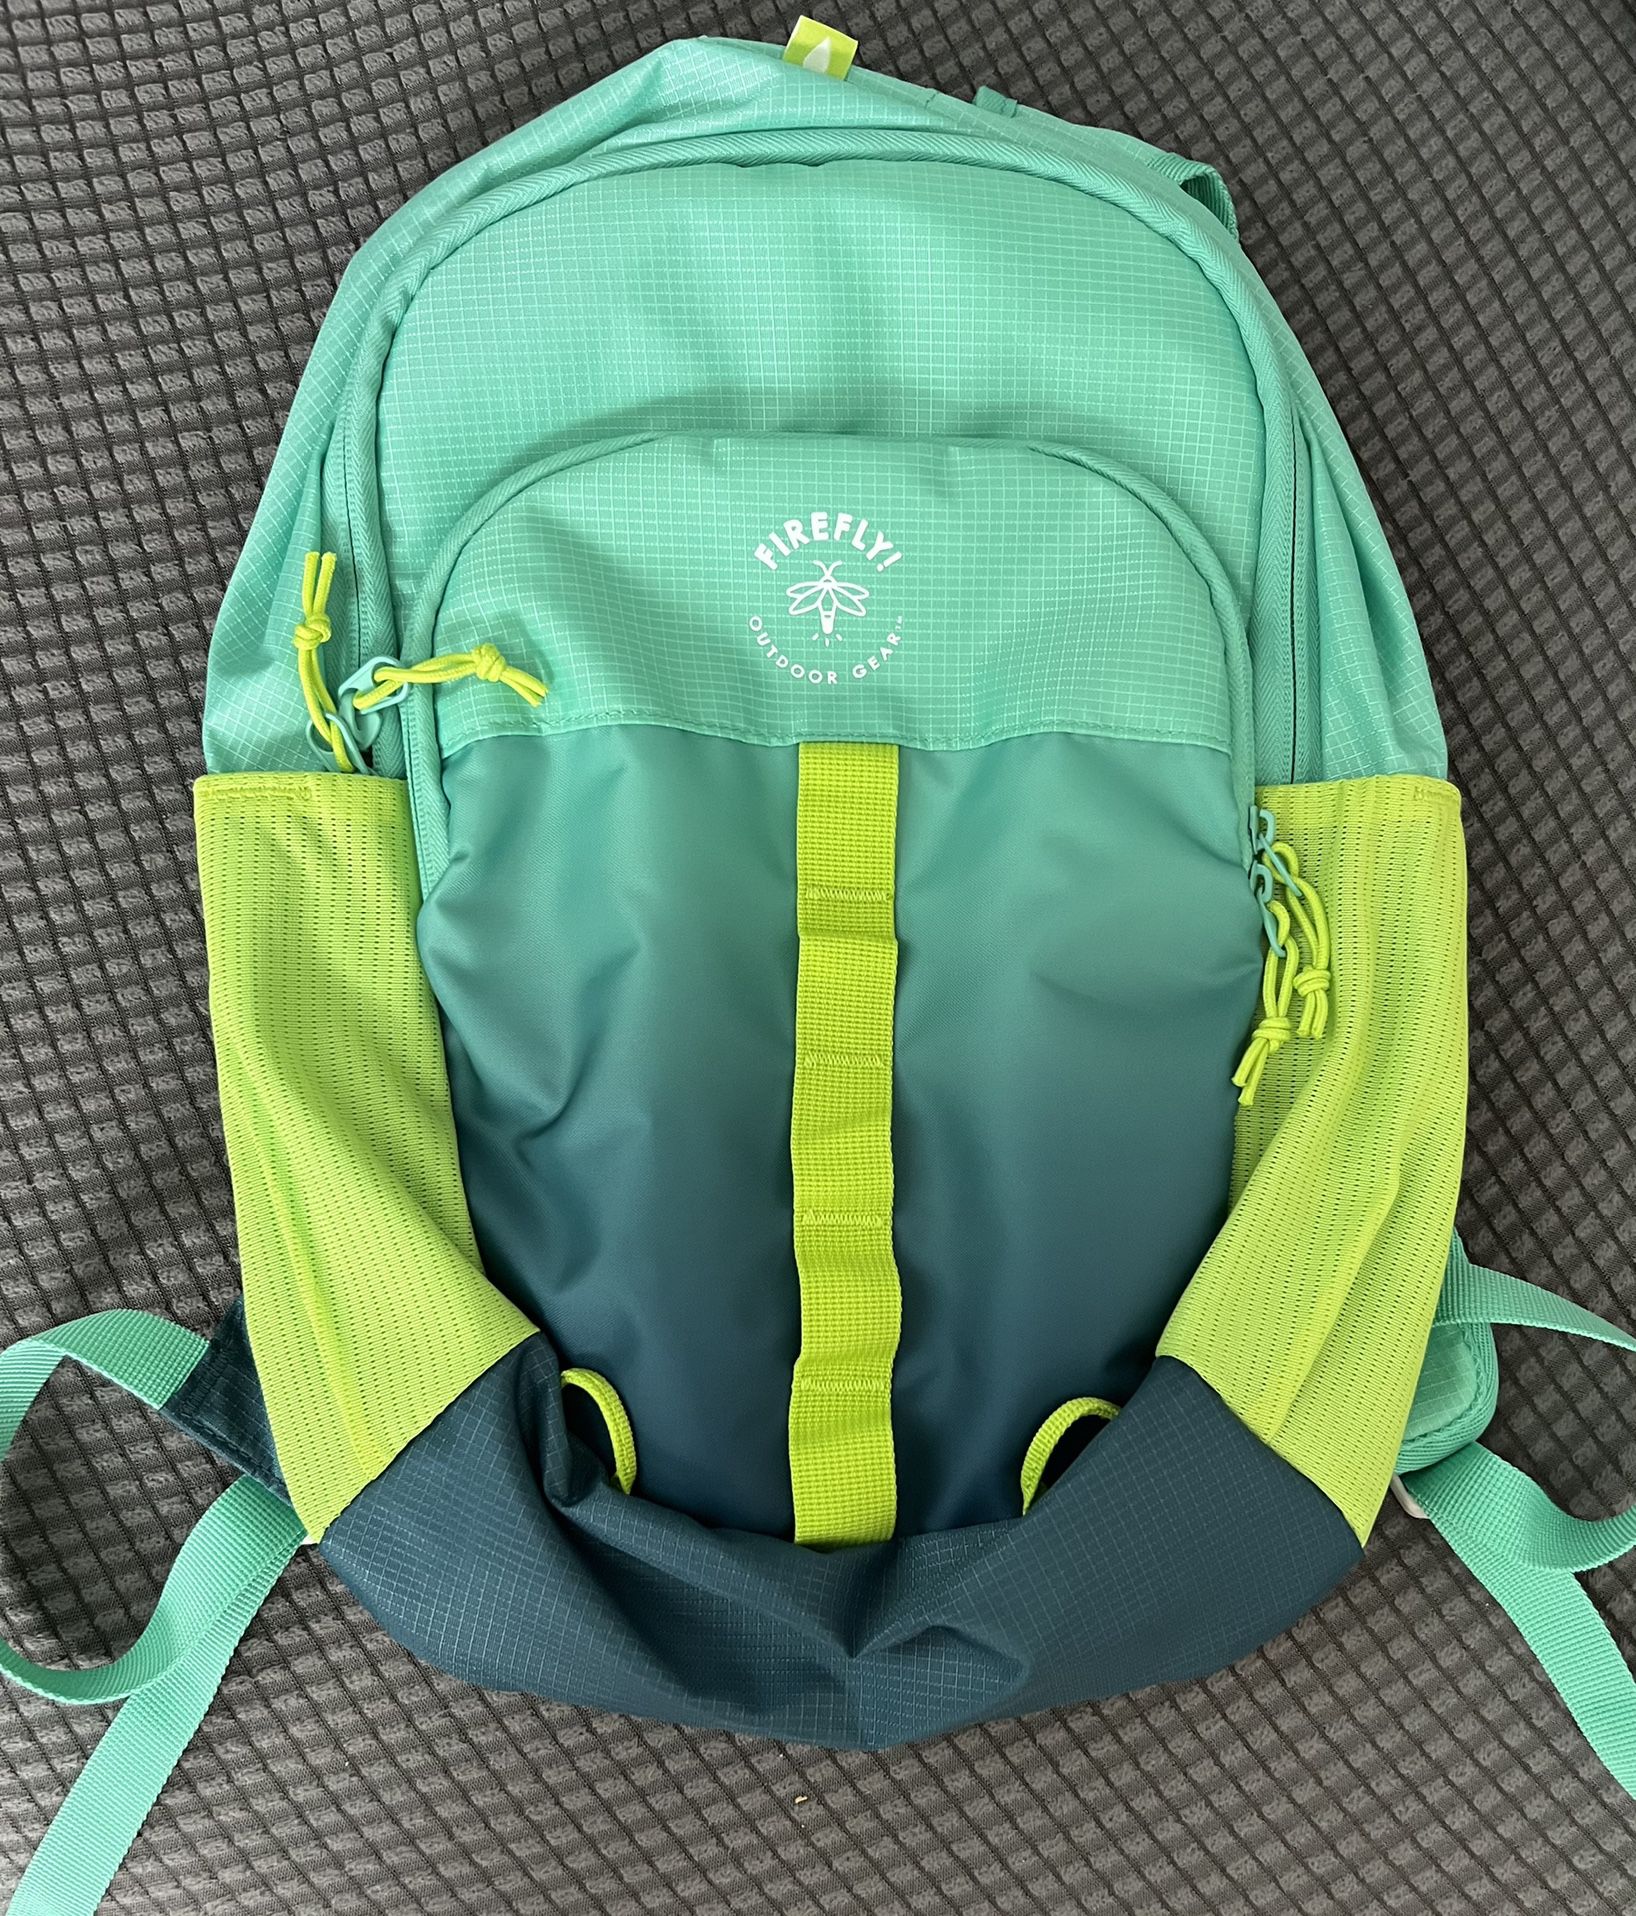 Firefly Kids Backpack 